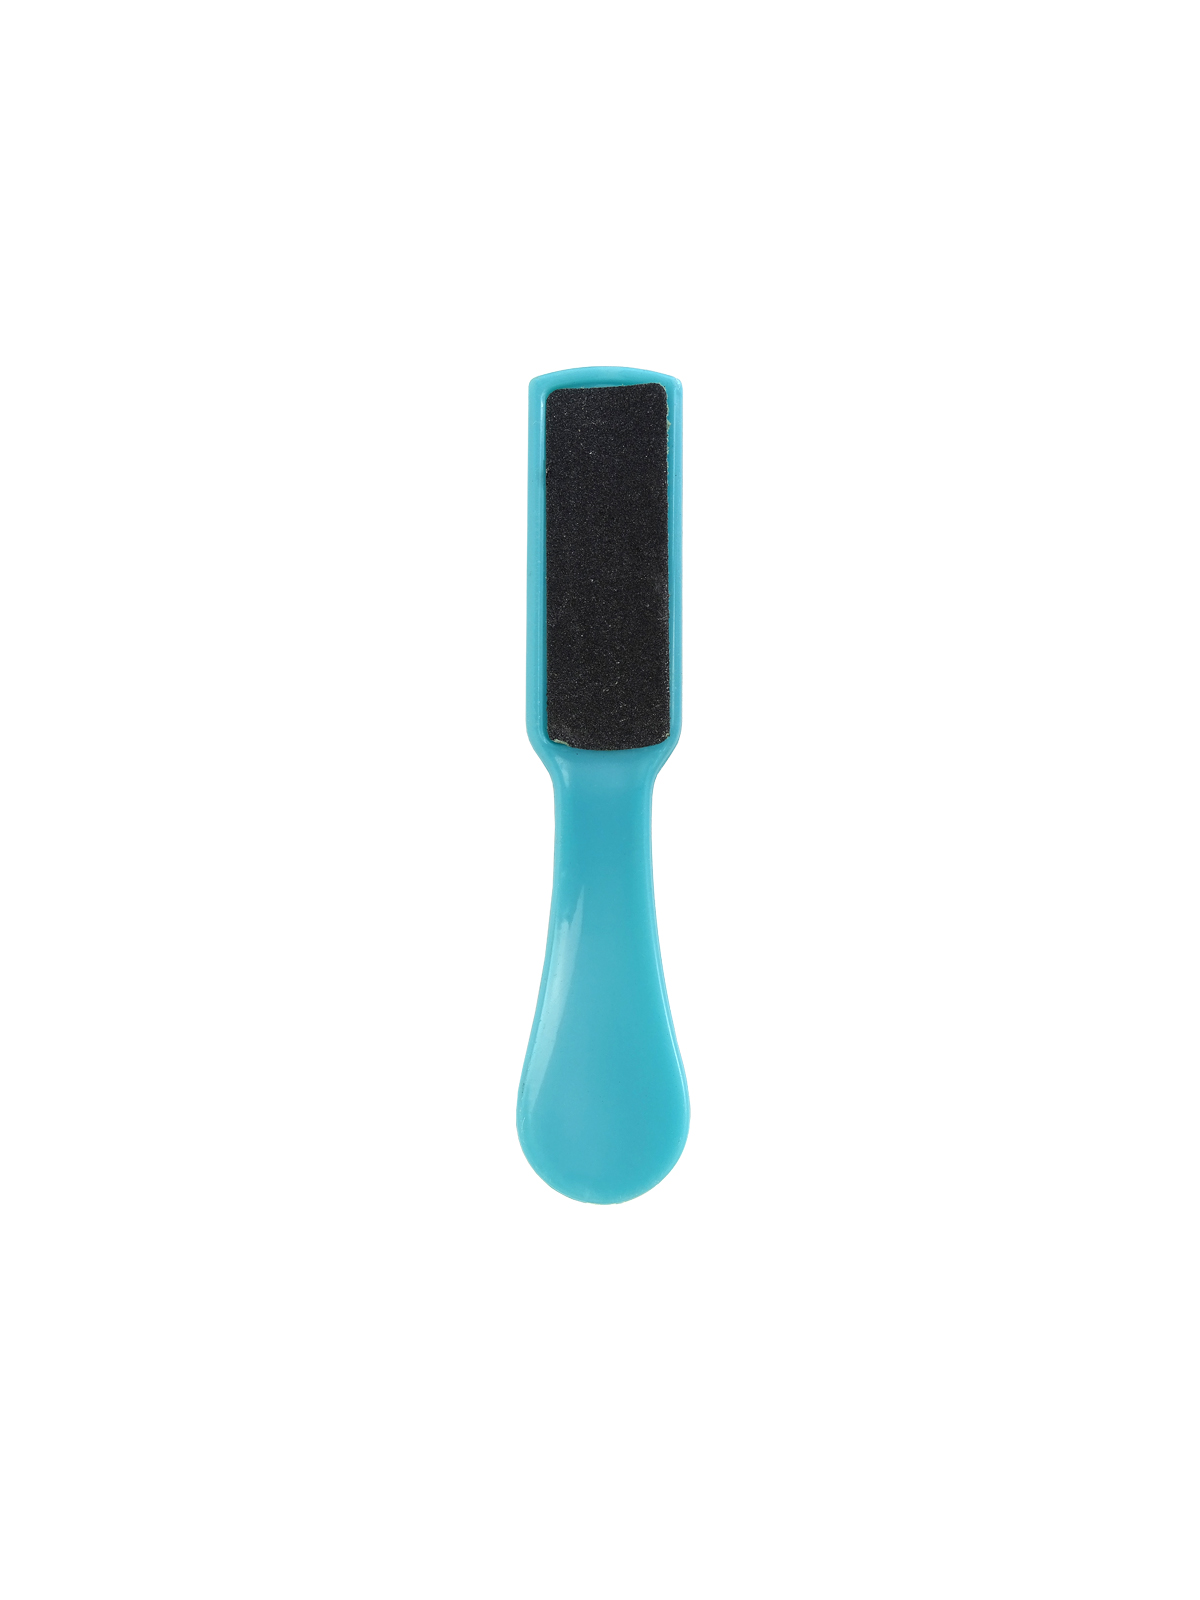 Терка-шлифовка для ног двухсторонняя "Manicure set", цвет микс, 17,5см, РФ 879-086